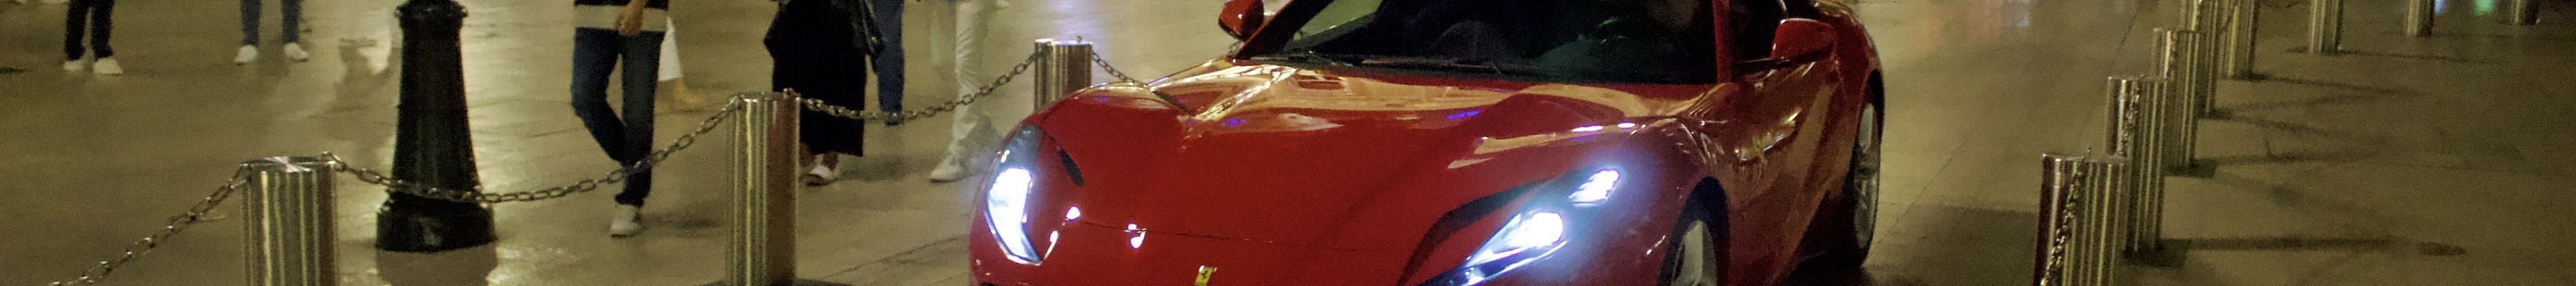 Ferrari 812 Superfast